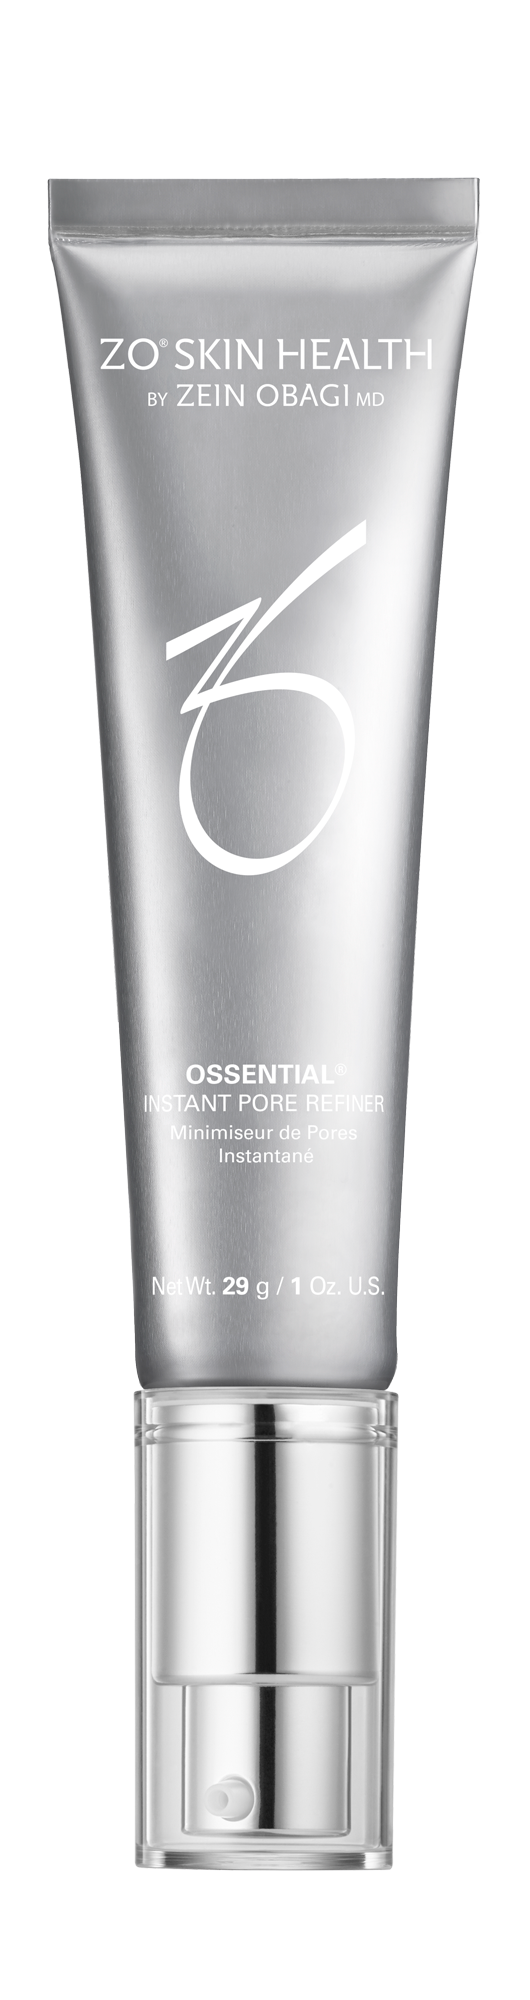 ZO Skin Health Ossential Instant Pore Refiner